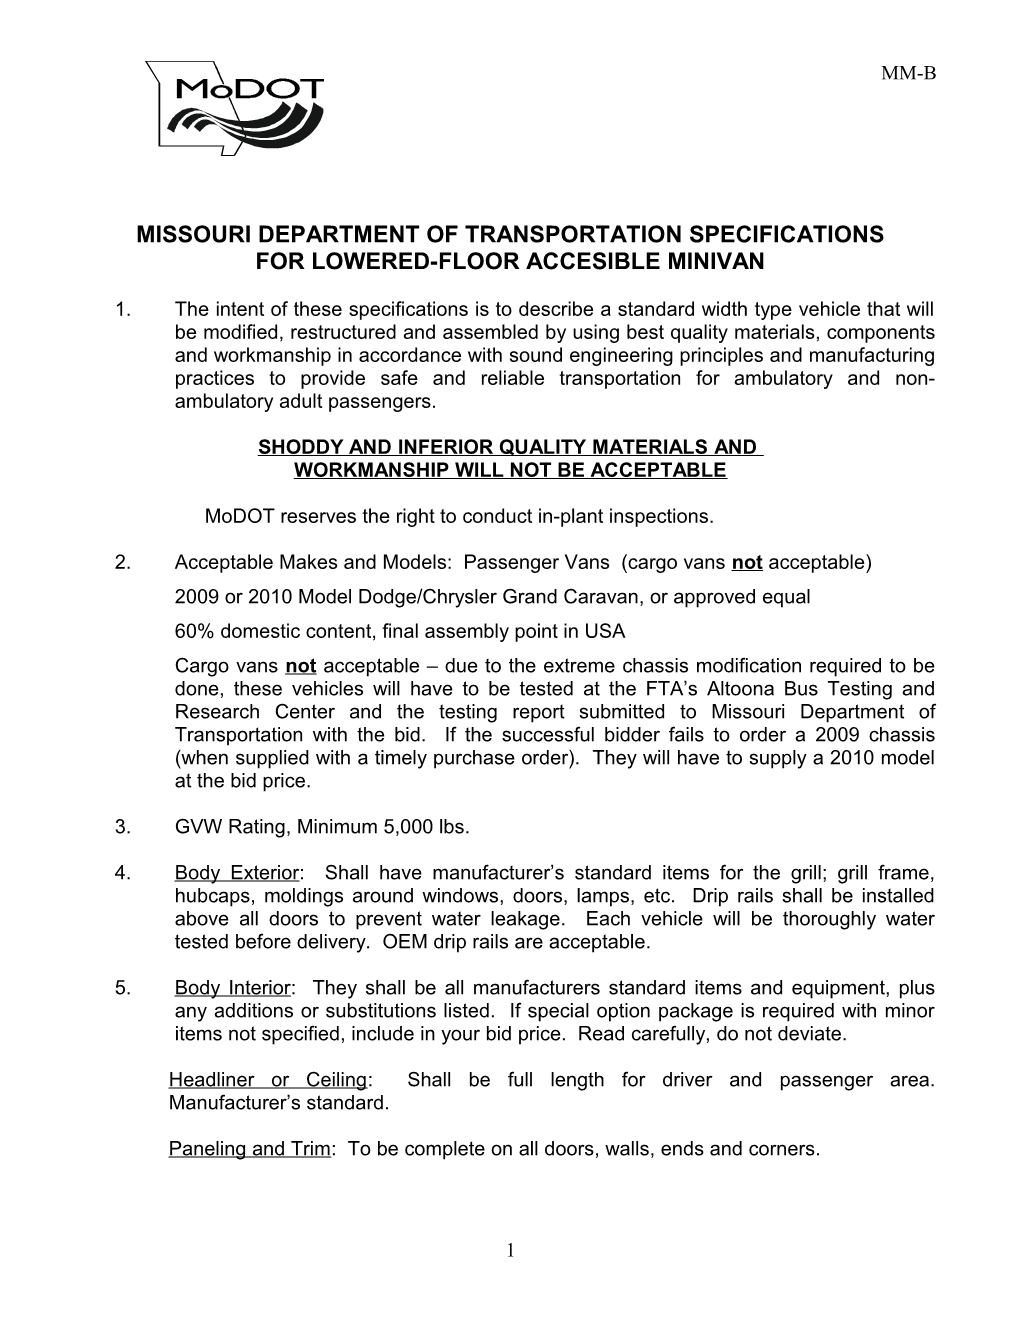 Missouri Department of Transportation Specifications